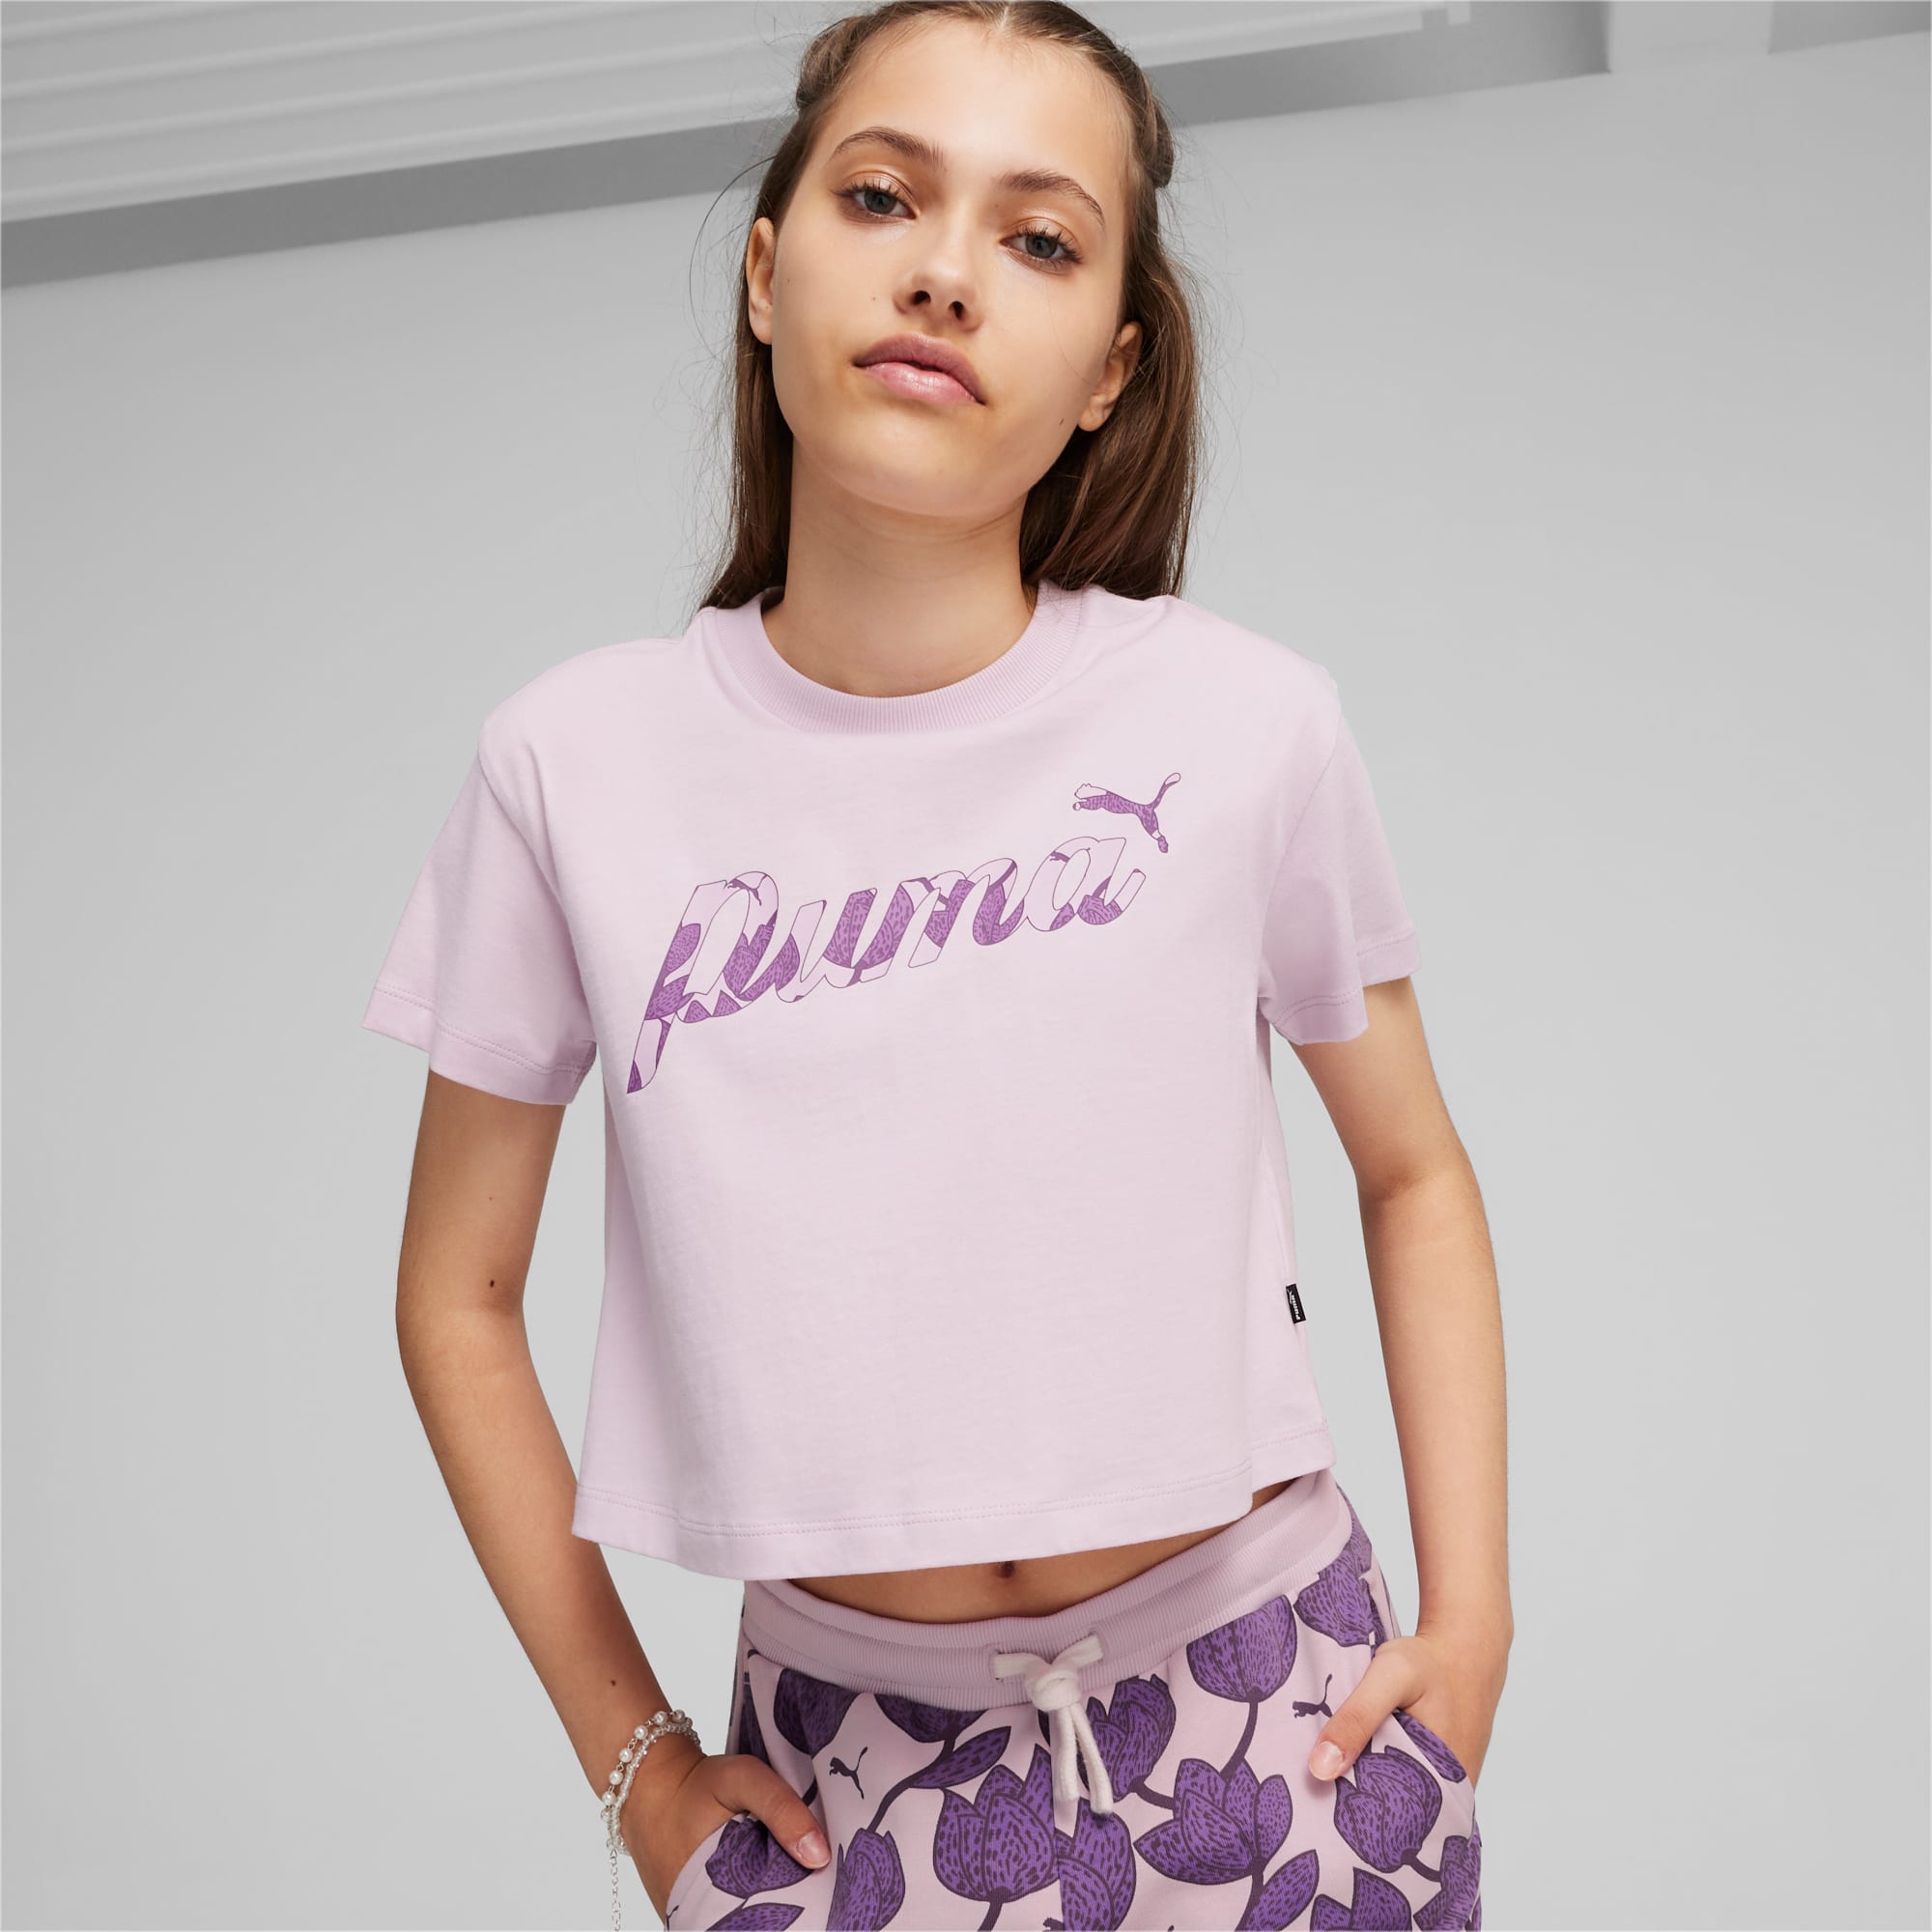 PUMA Ess+ Blossom Youth Short T-Shirt, Grape Mist